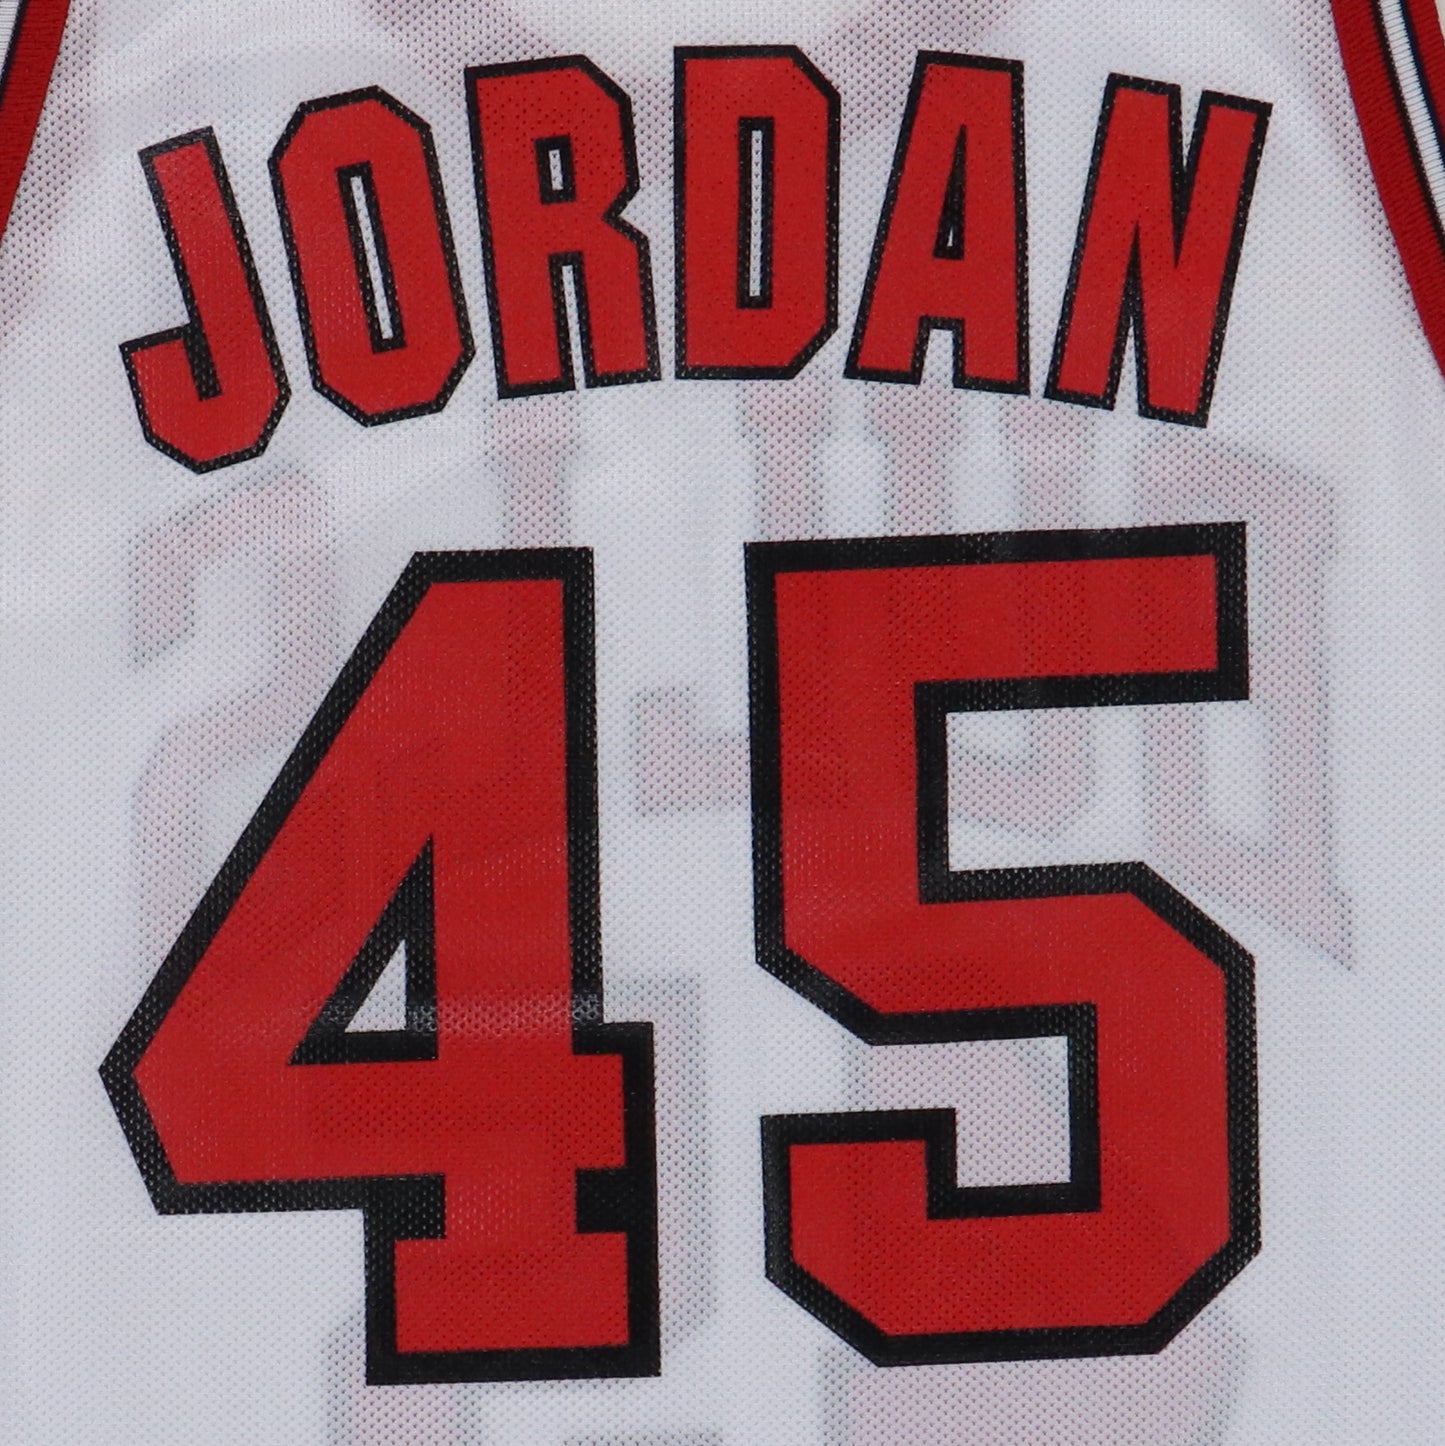 90's Michael Jordan Chicago Bulls Champion NBA Jersey Size 44 – Rare VNTG